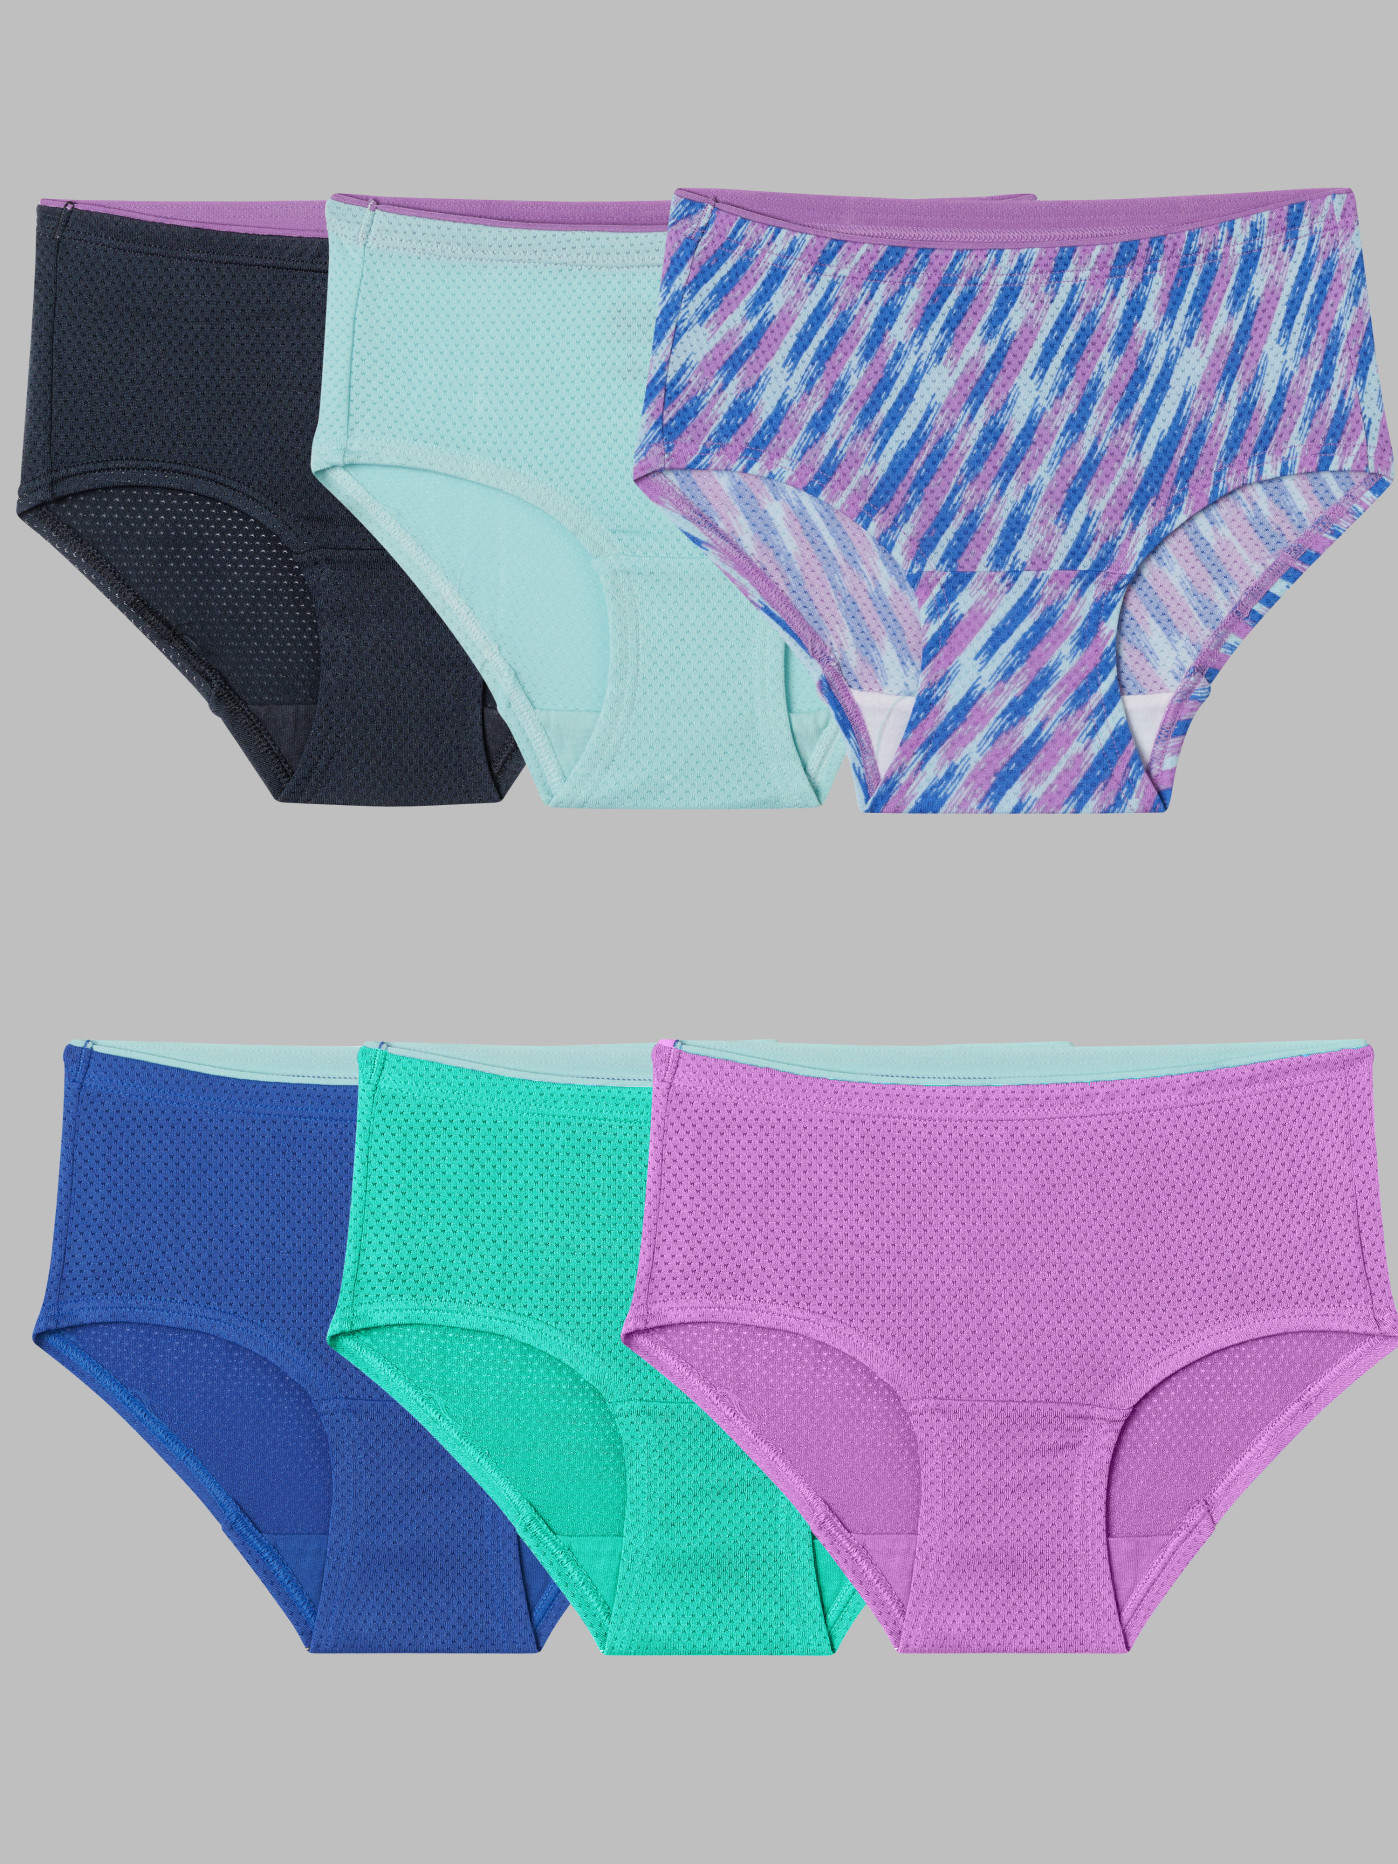 6 Pack Baby Girls Underwear Cotton Breathable Briefs Comfort Kids Panties  2-10T 